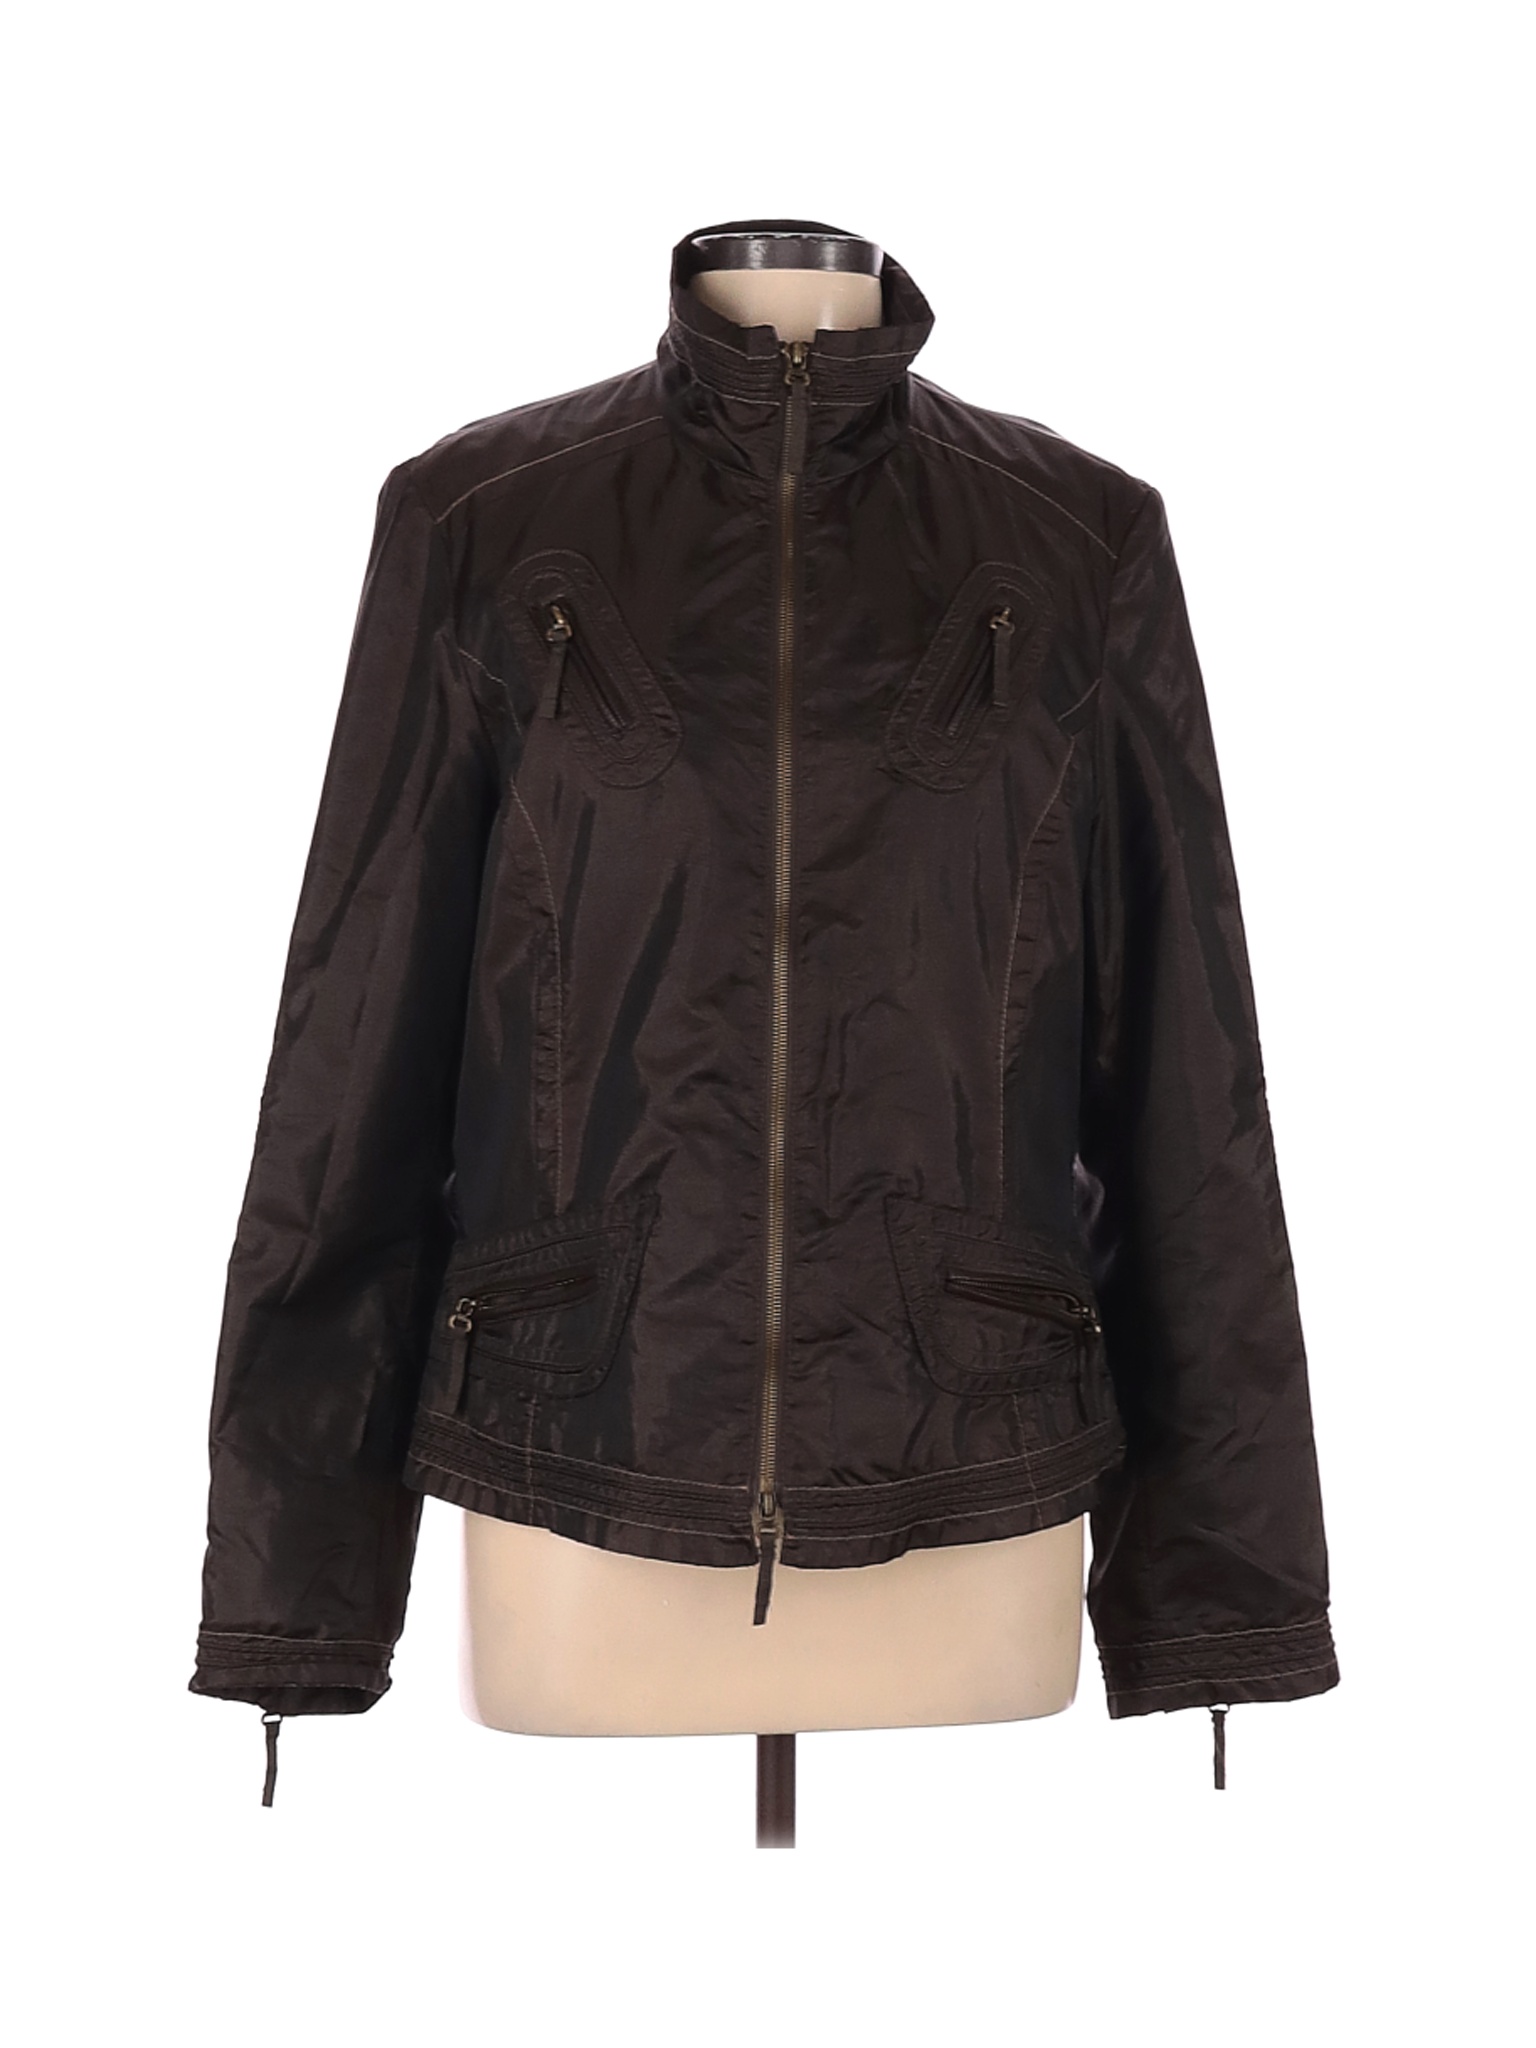 Taifun Collection Women Brown Jacket One Size | eBay